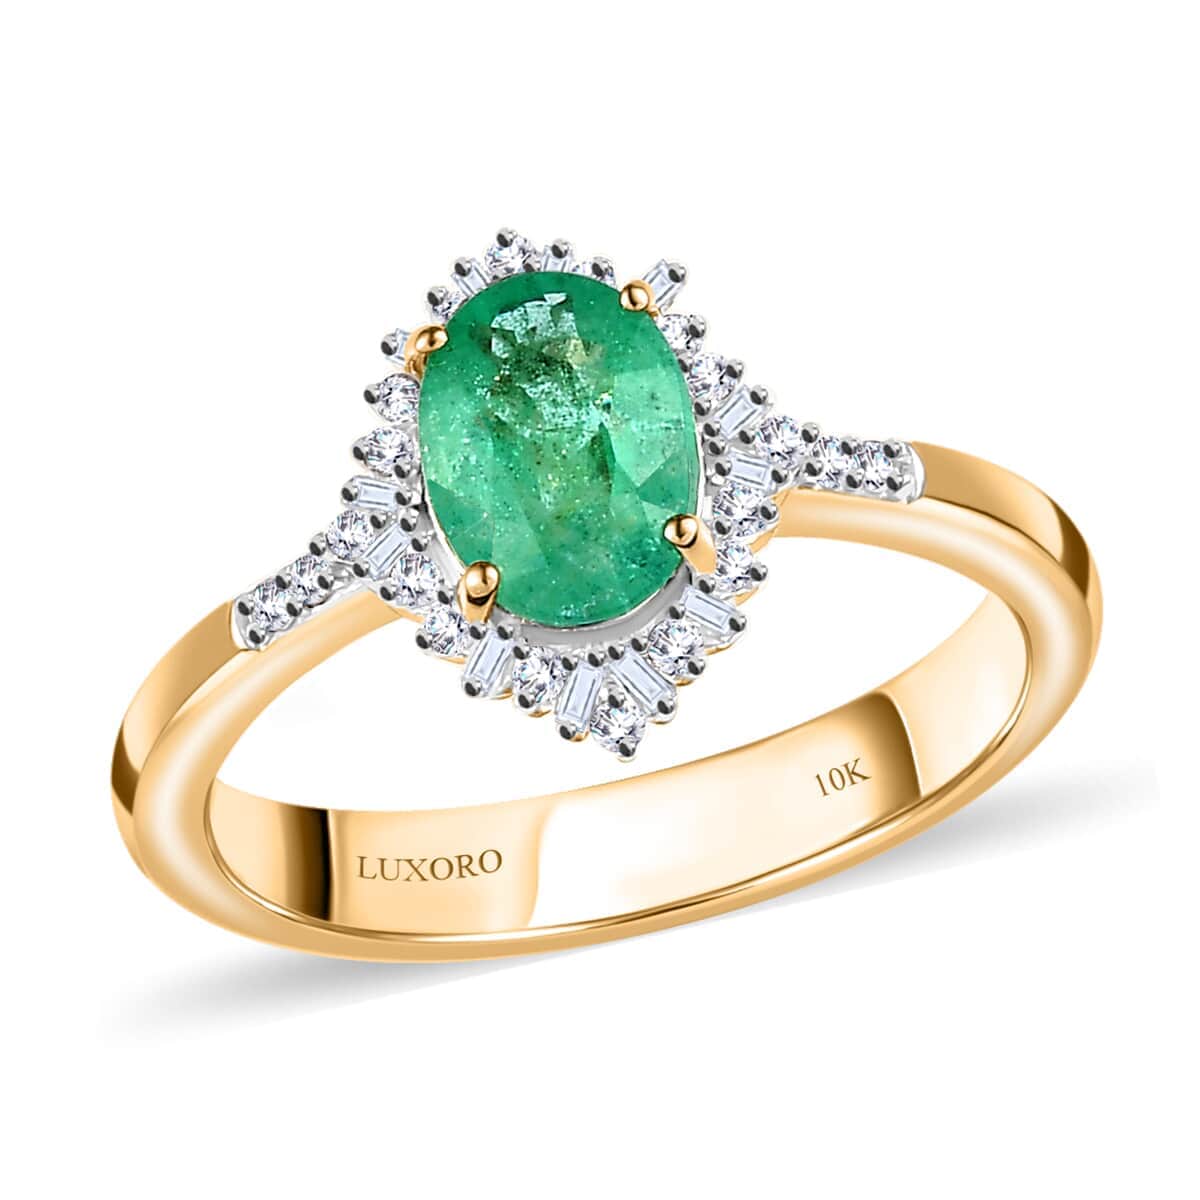 Luxoro 10K Yellow Gold Premium Ethiopian Emerald and G-H I3 Diamond Halo Ring (Size 7.0) 1.40 ctw image number 0